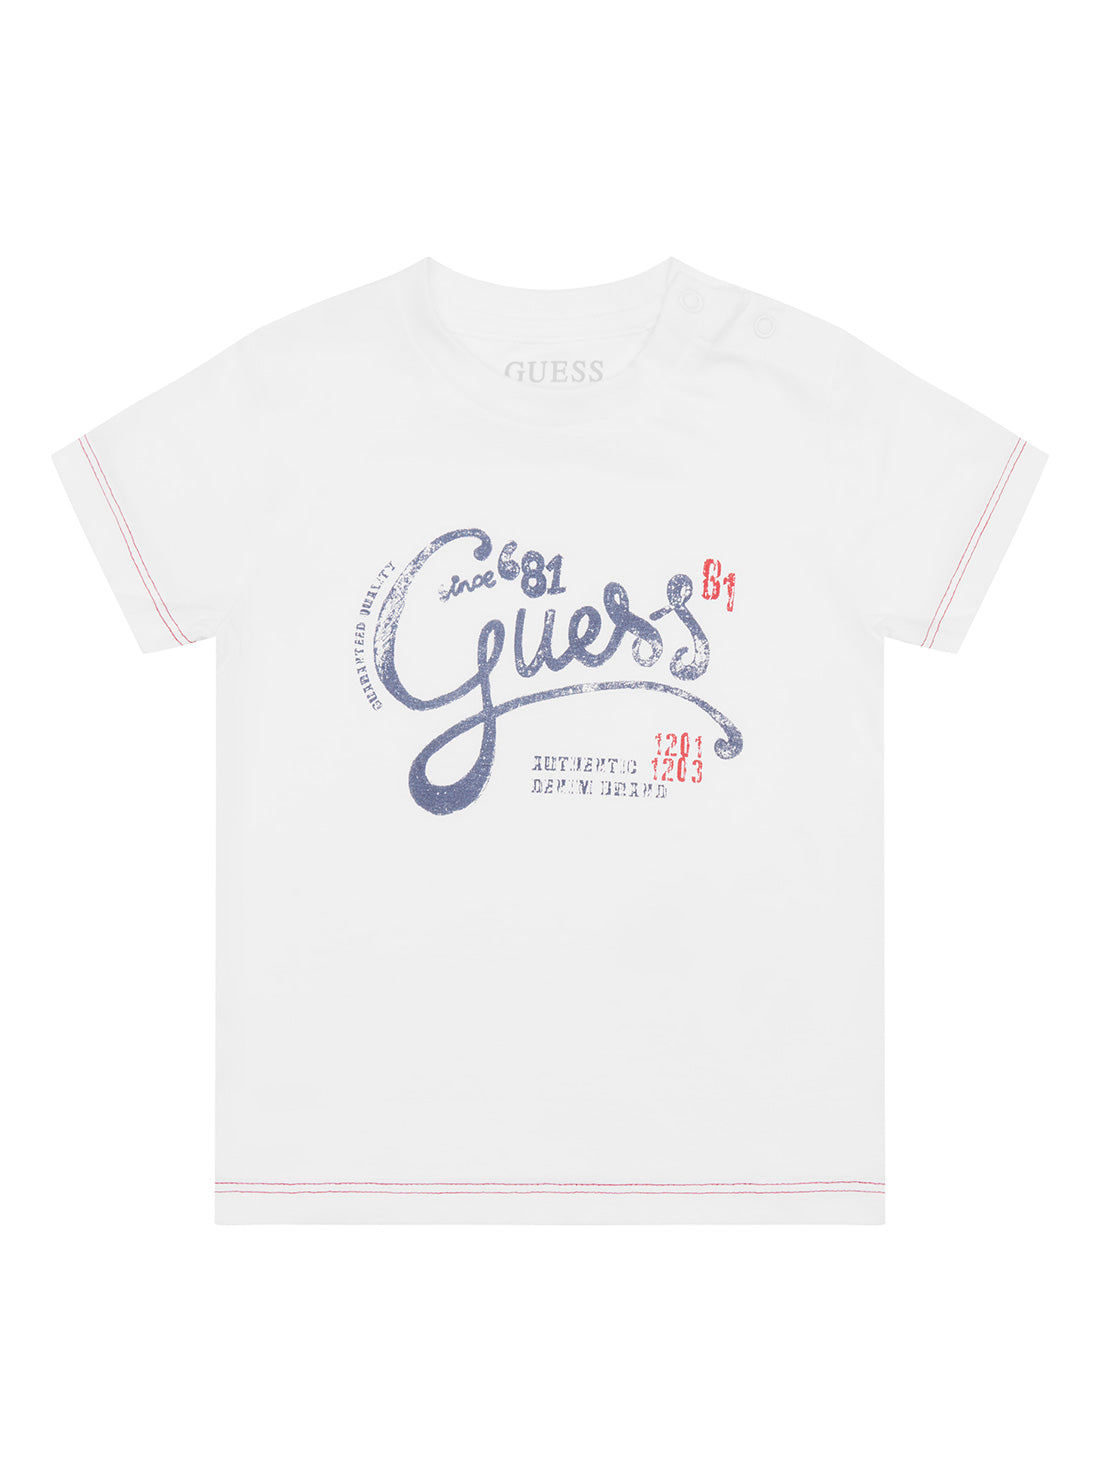 GUESS Baby White 1981 Logo T-Shirt (3-18m) I2GI02K8HM3 Front View